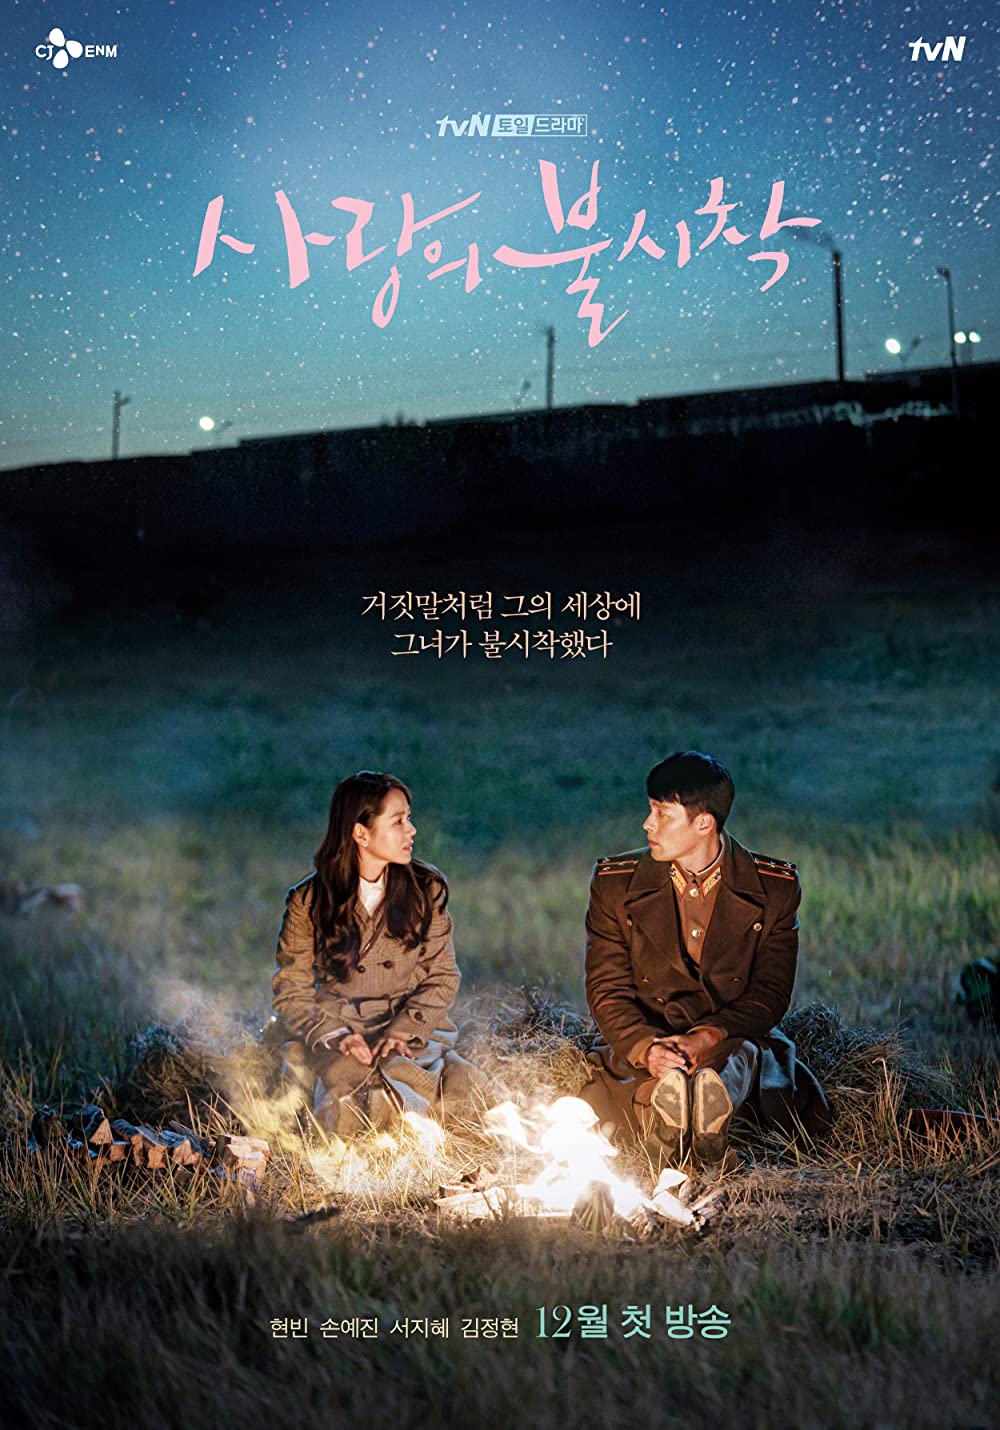 13 Drama Korea populer di Netflix seluruh dunia, banyak cerita seru